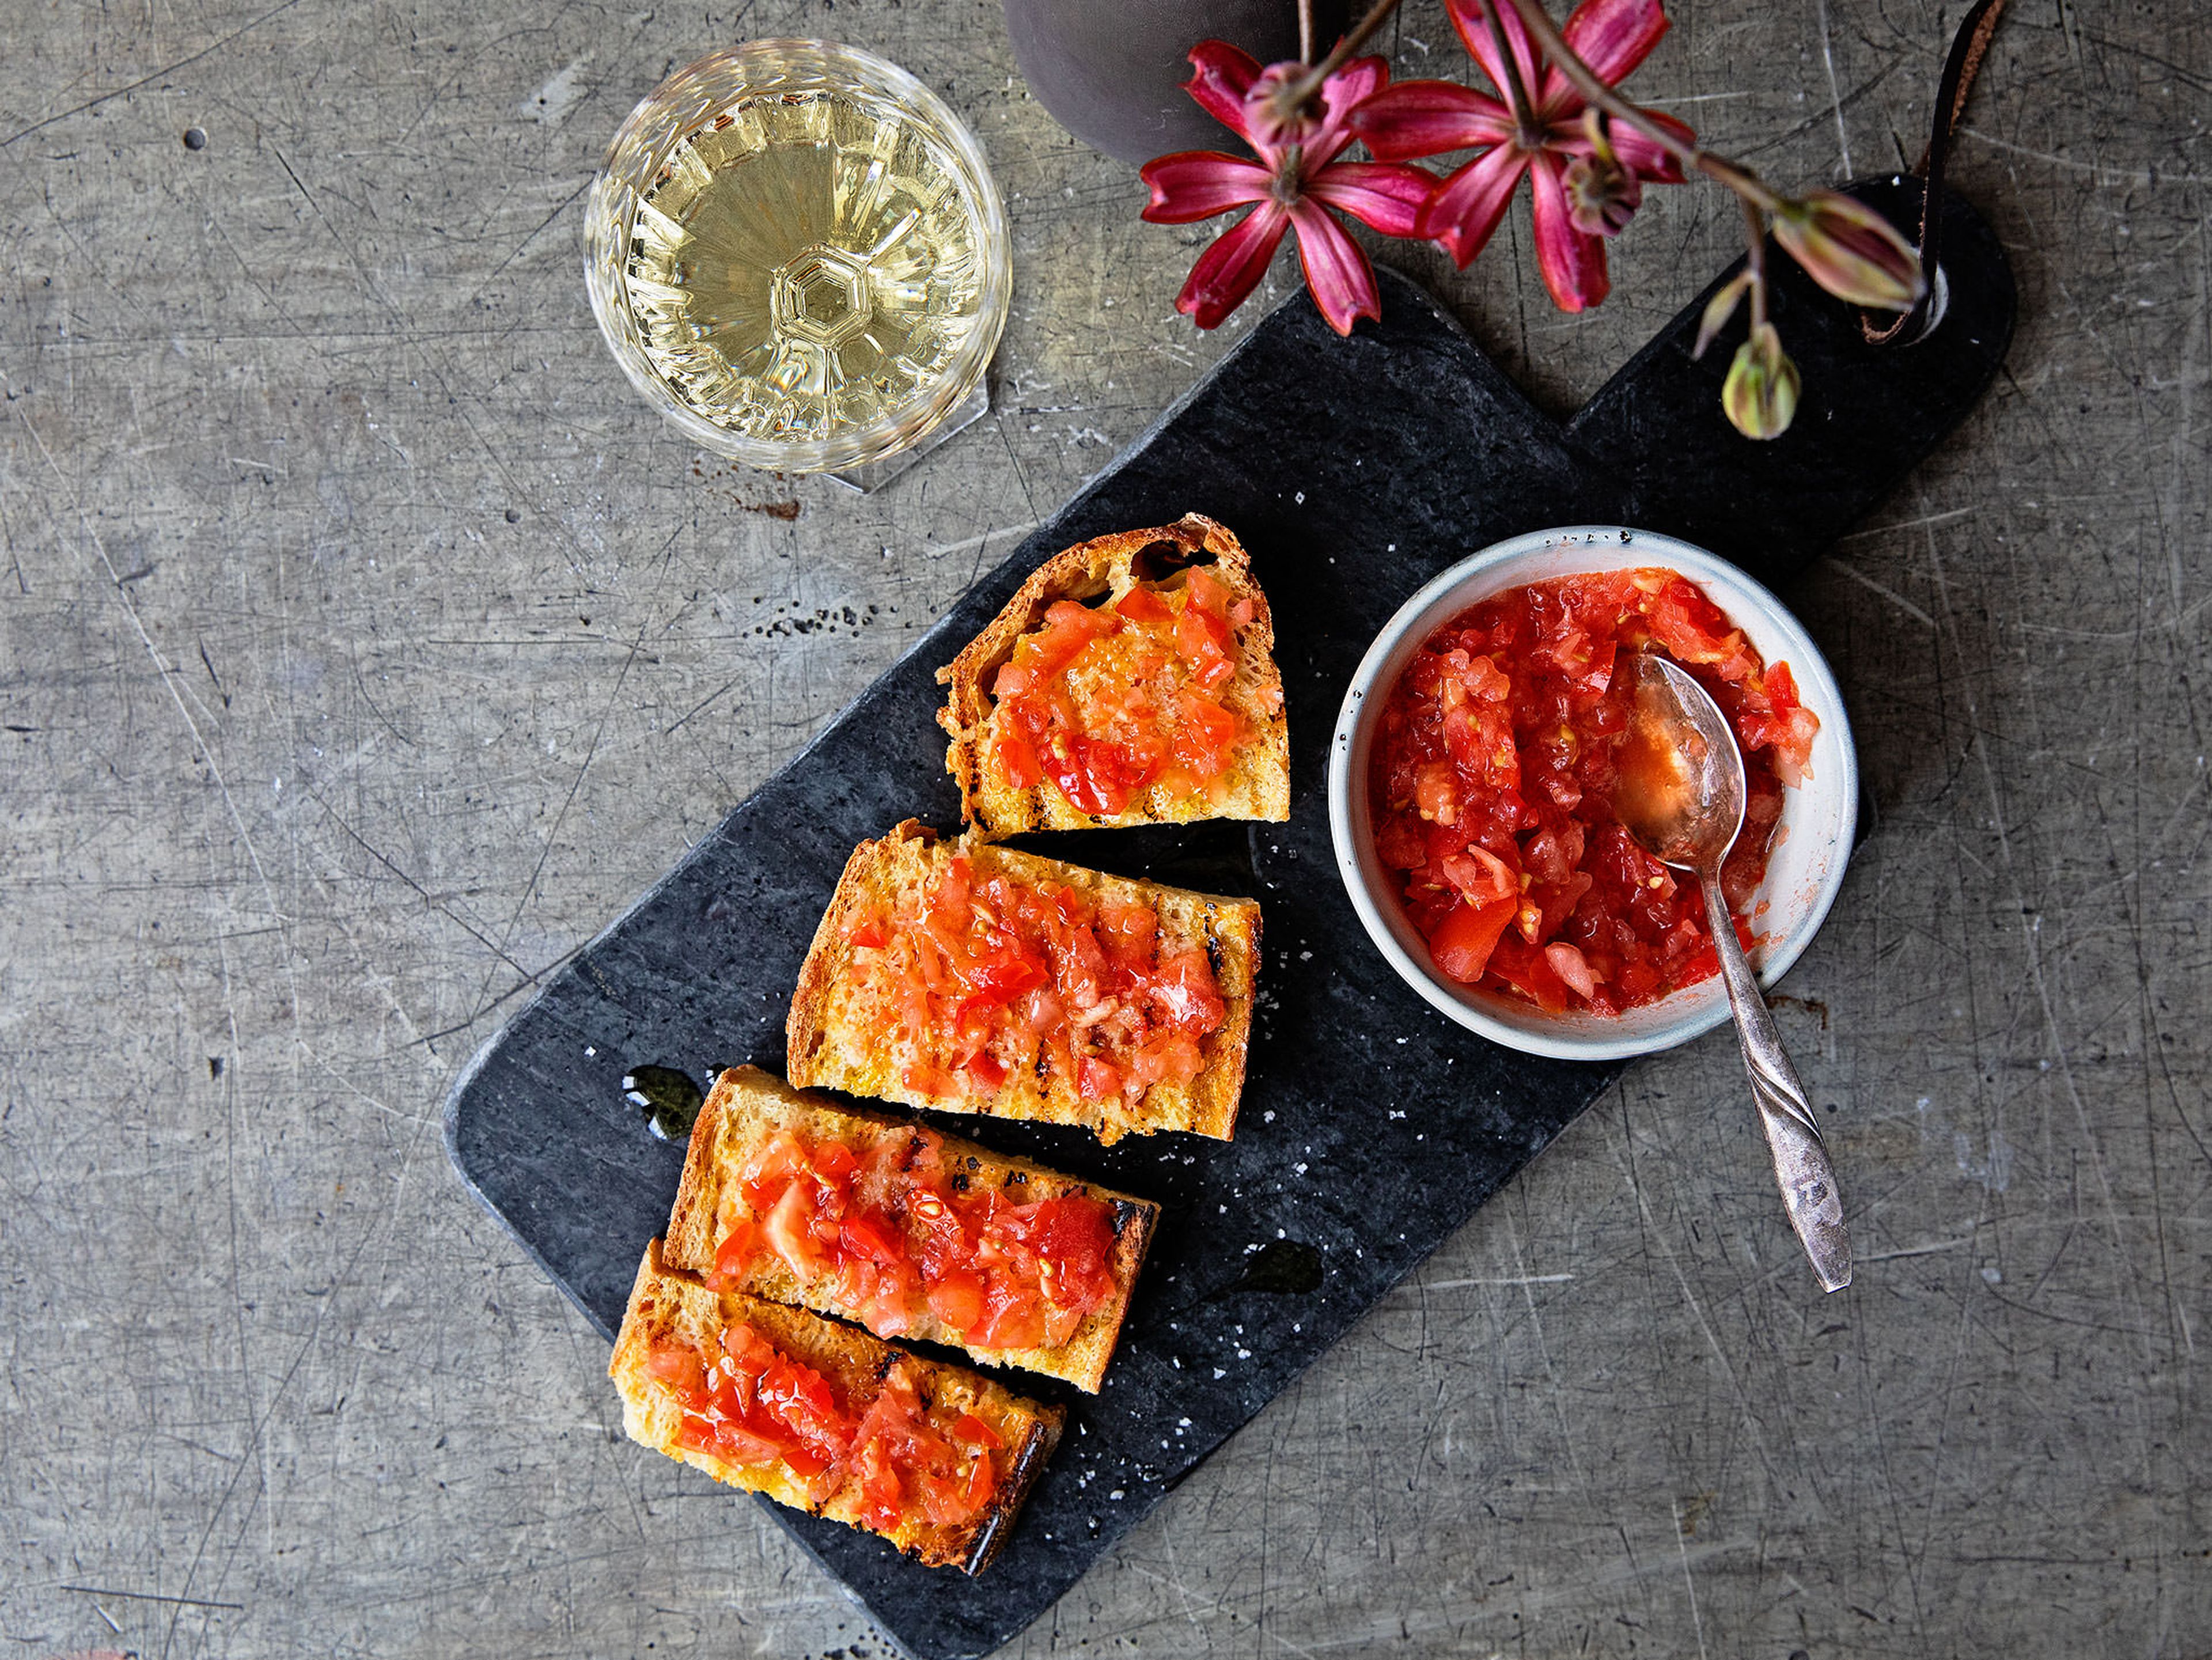 Katalanisches Tomaten-Knoblauch-Brot